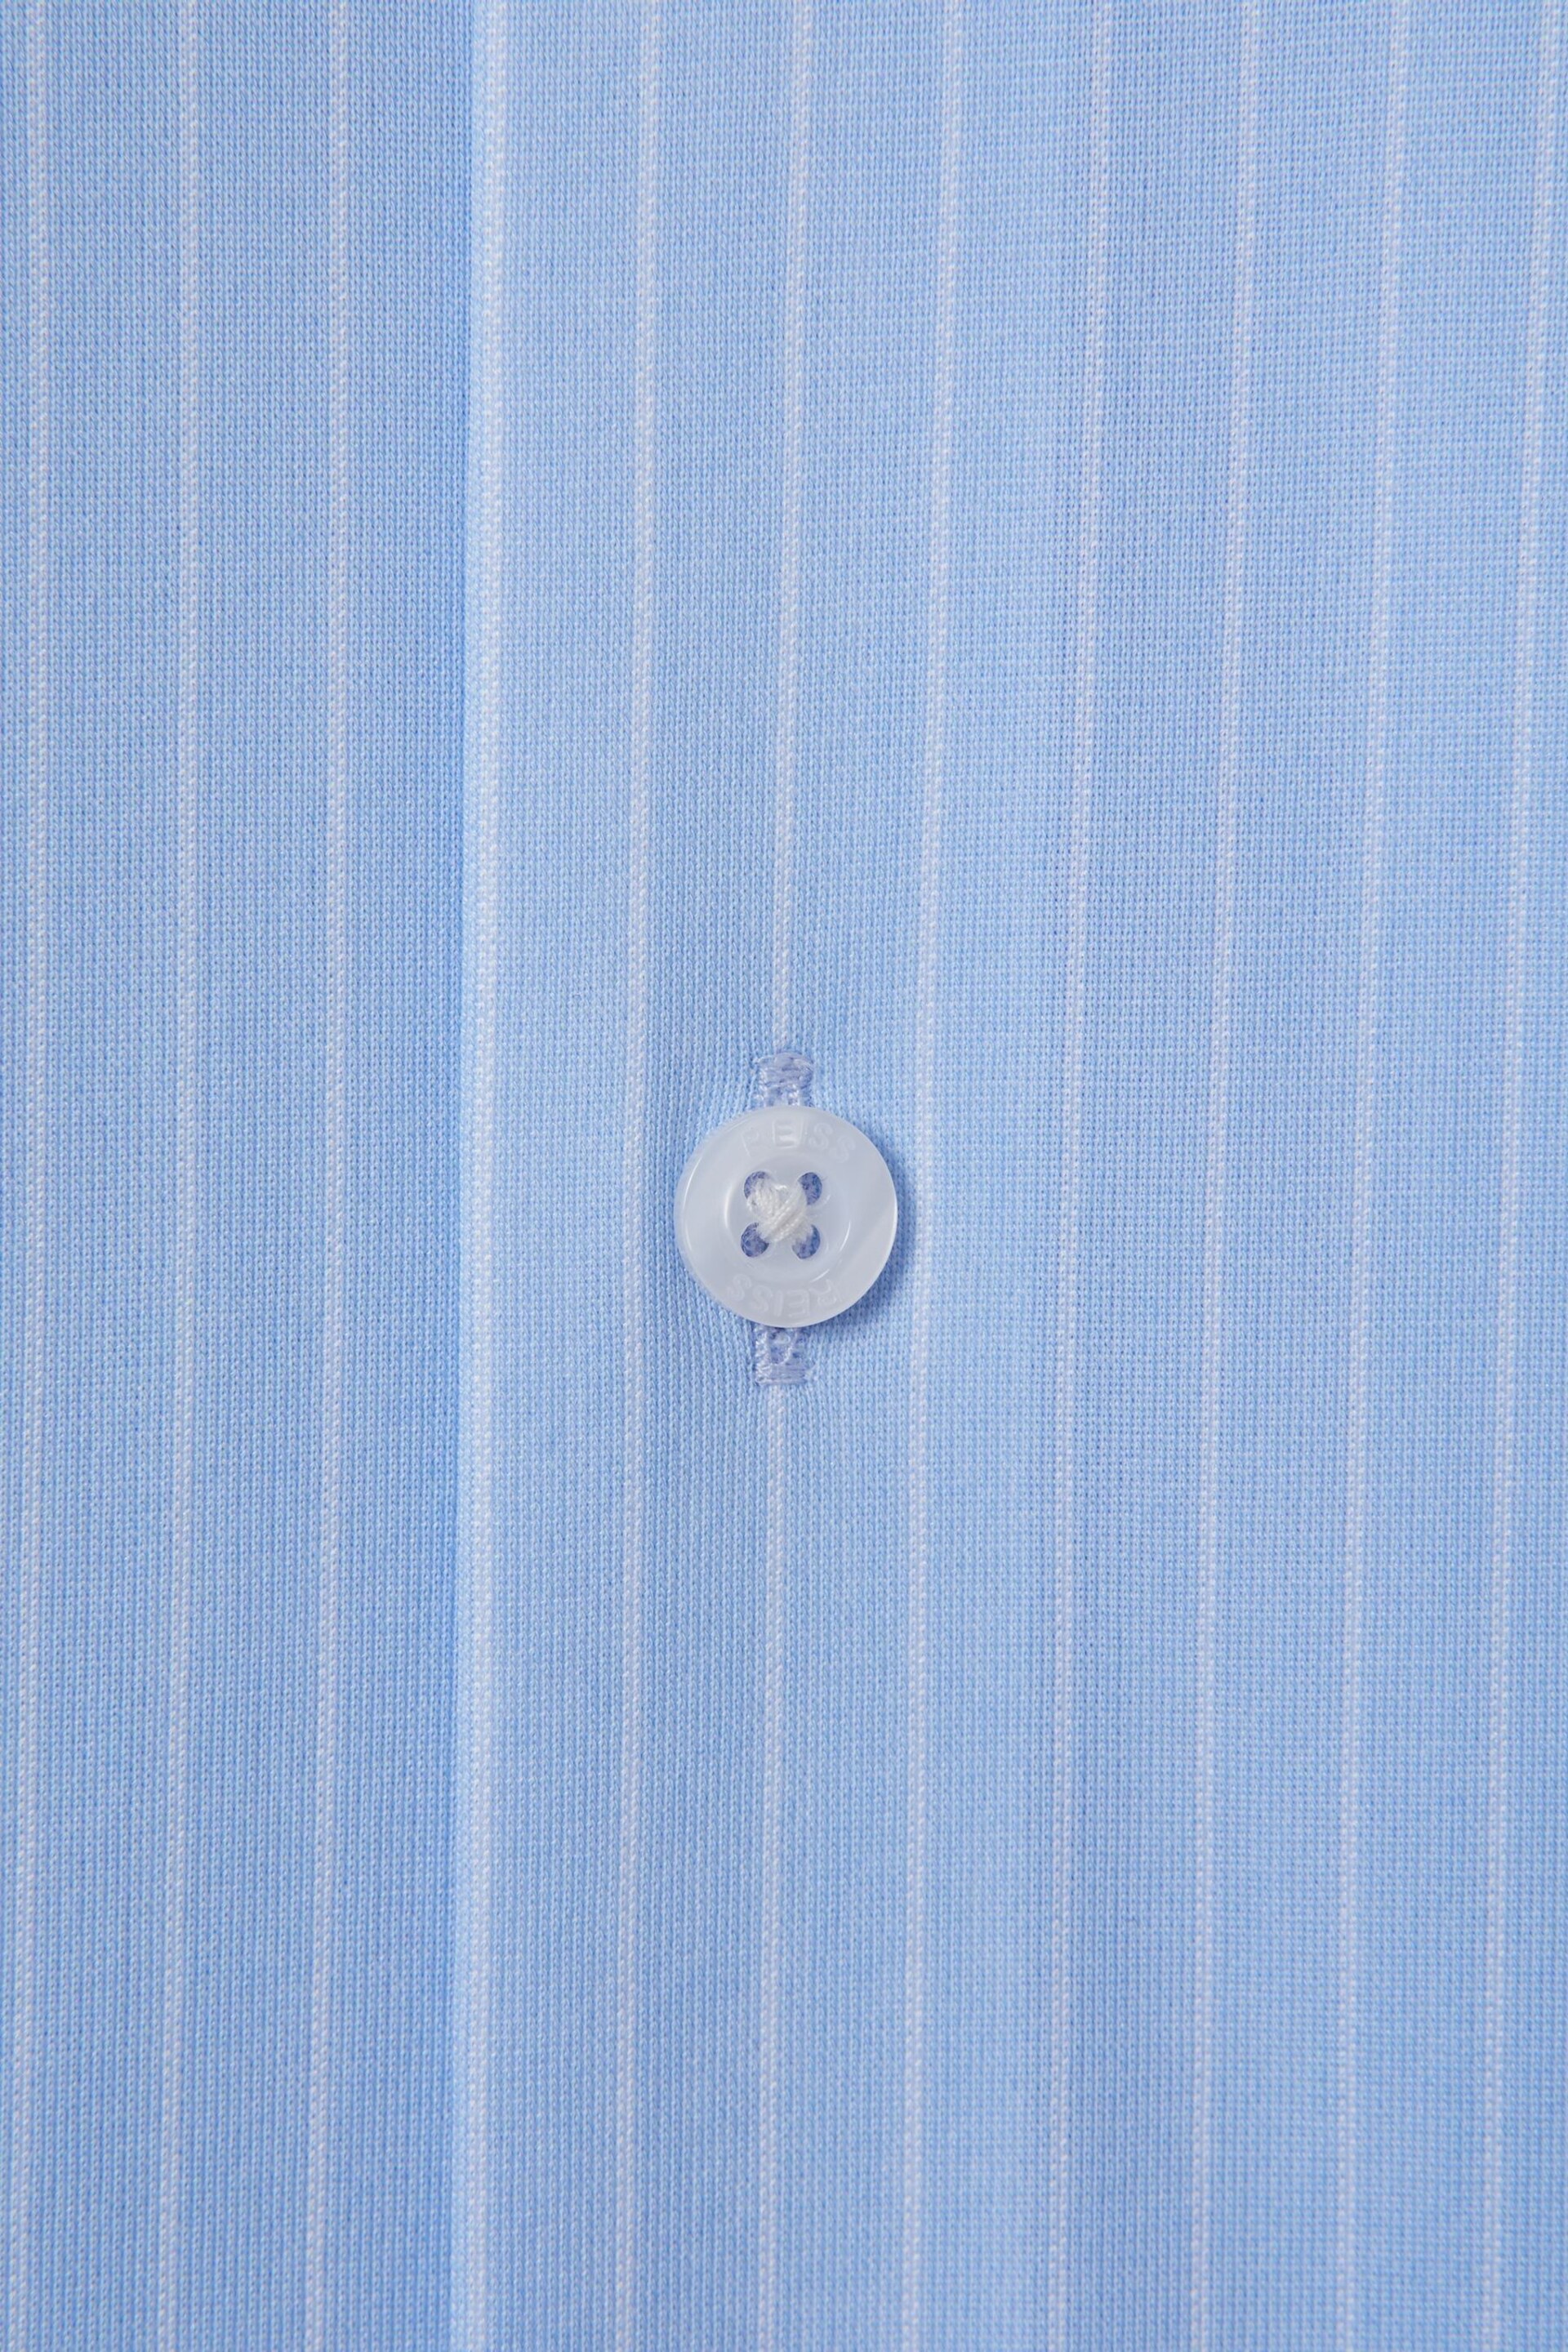 Reiss Soft Blue/White Fletcher Striped Cotton Blend Shirt - Image 6 of 6